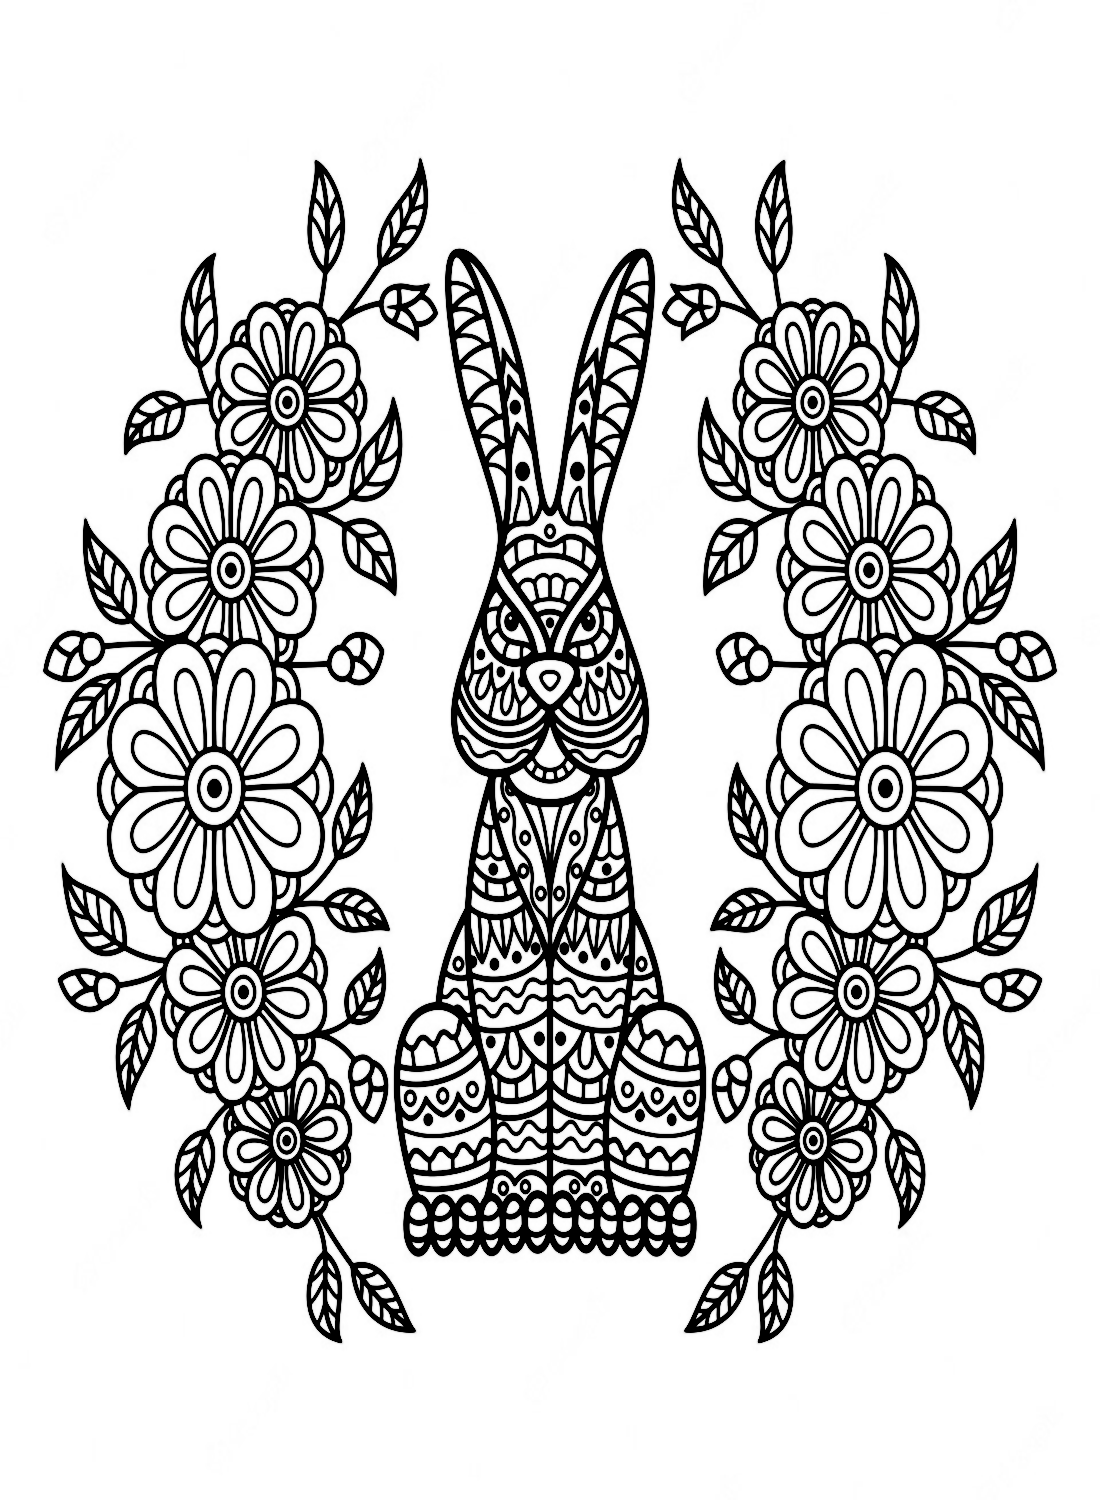 Rabbit In Zentangle Style from Rabbit